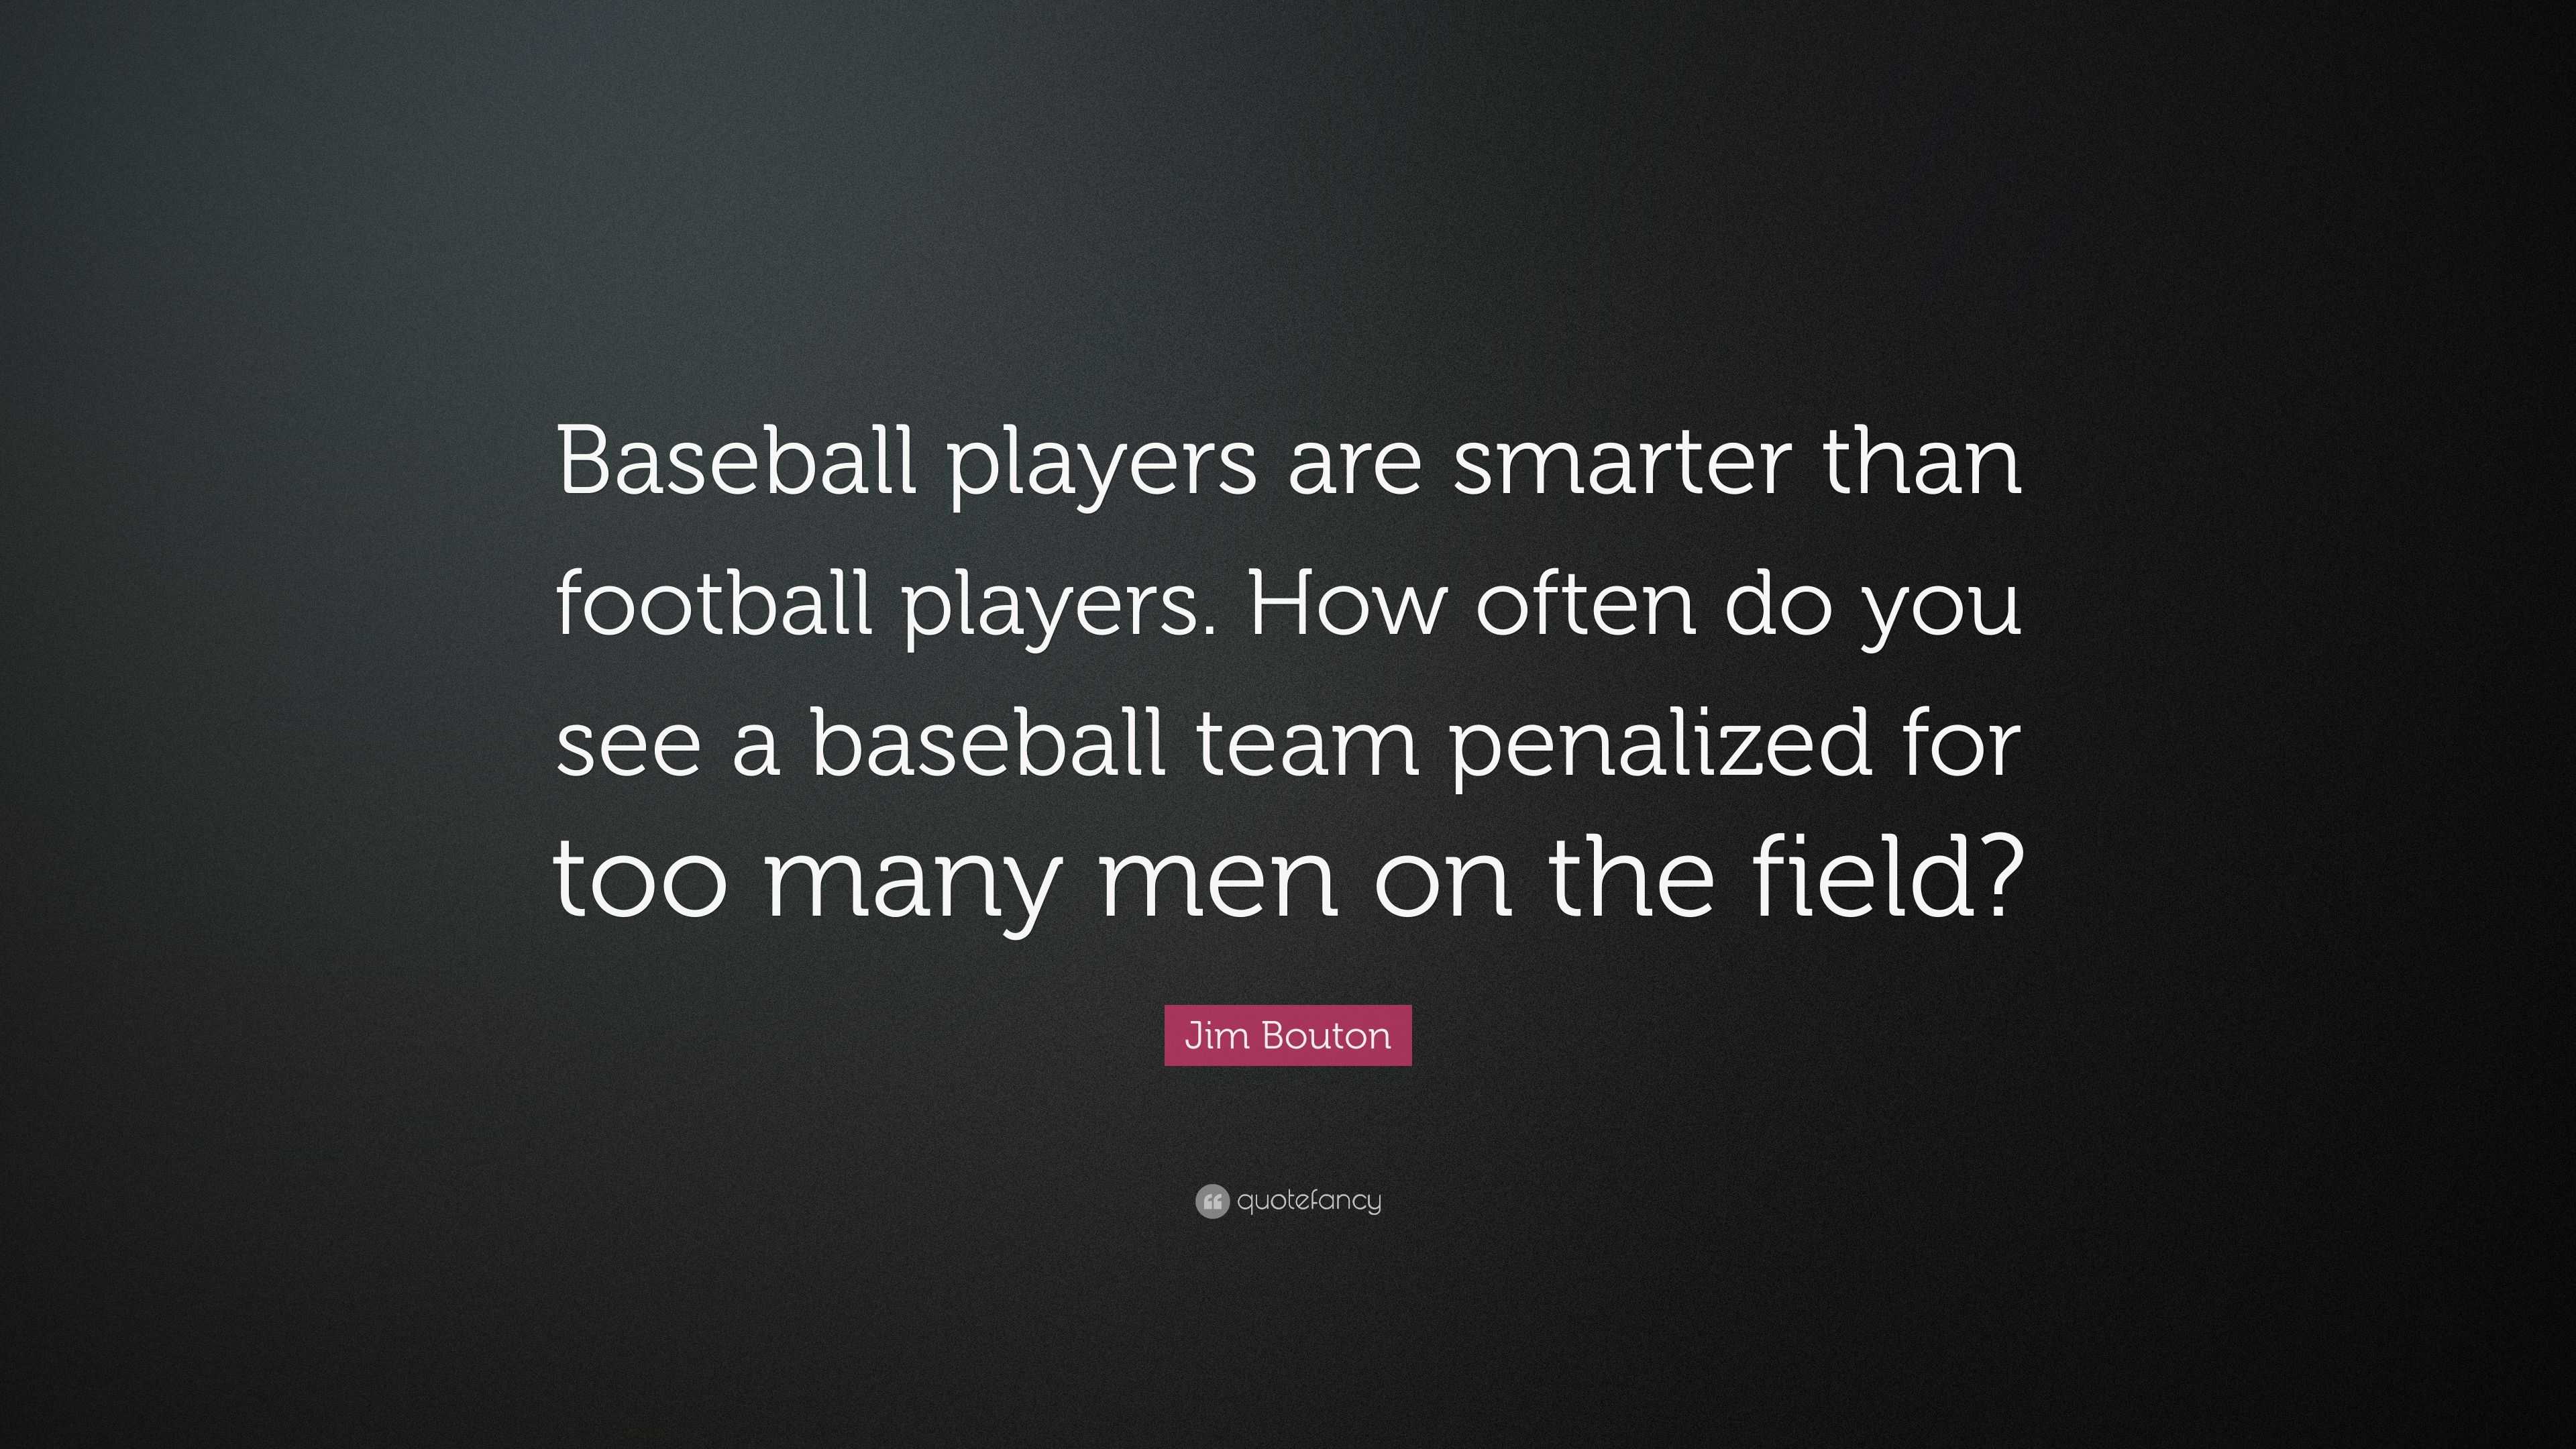 Jim Bouton Quote: “Baseball players are smarter than football players ...